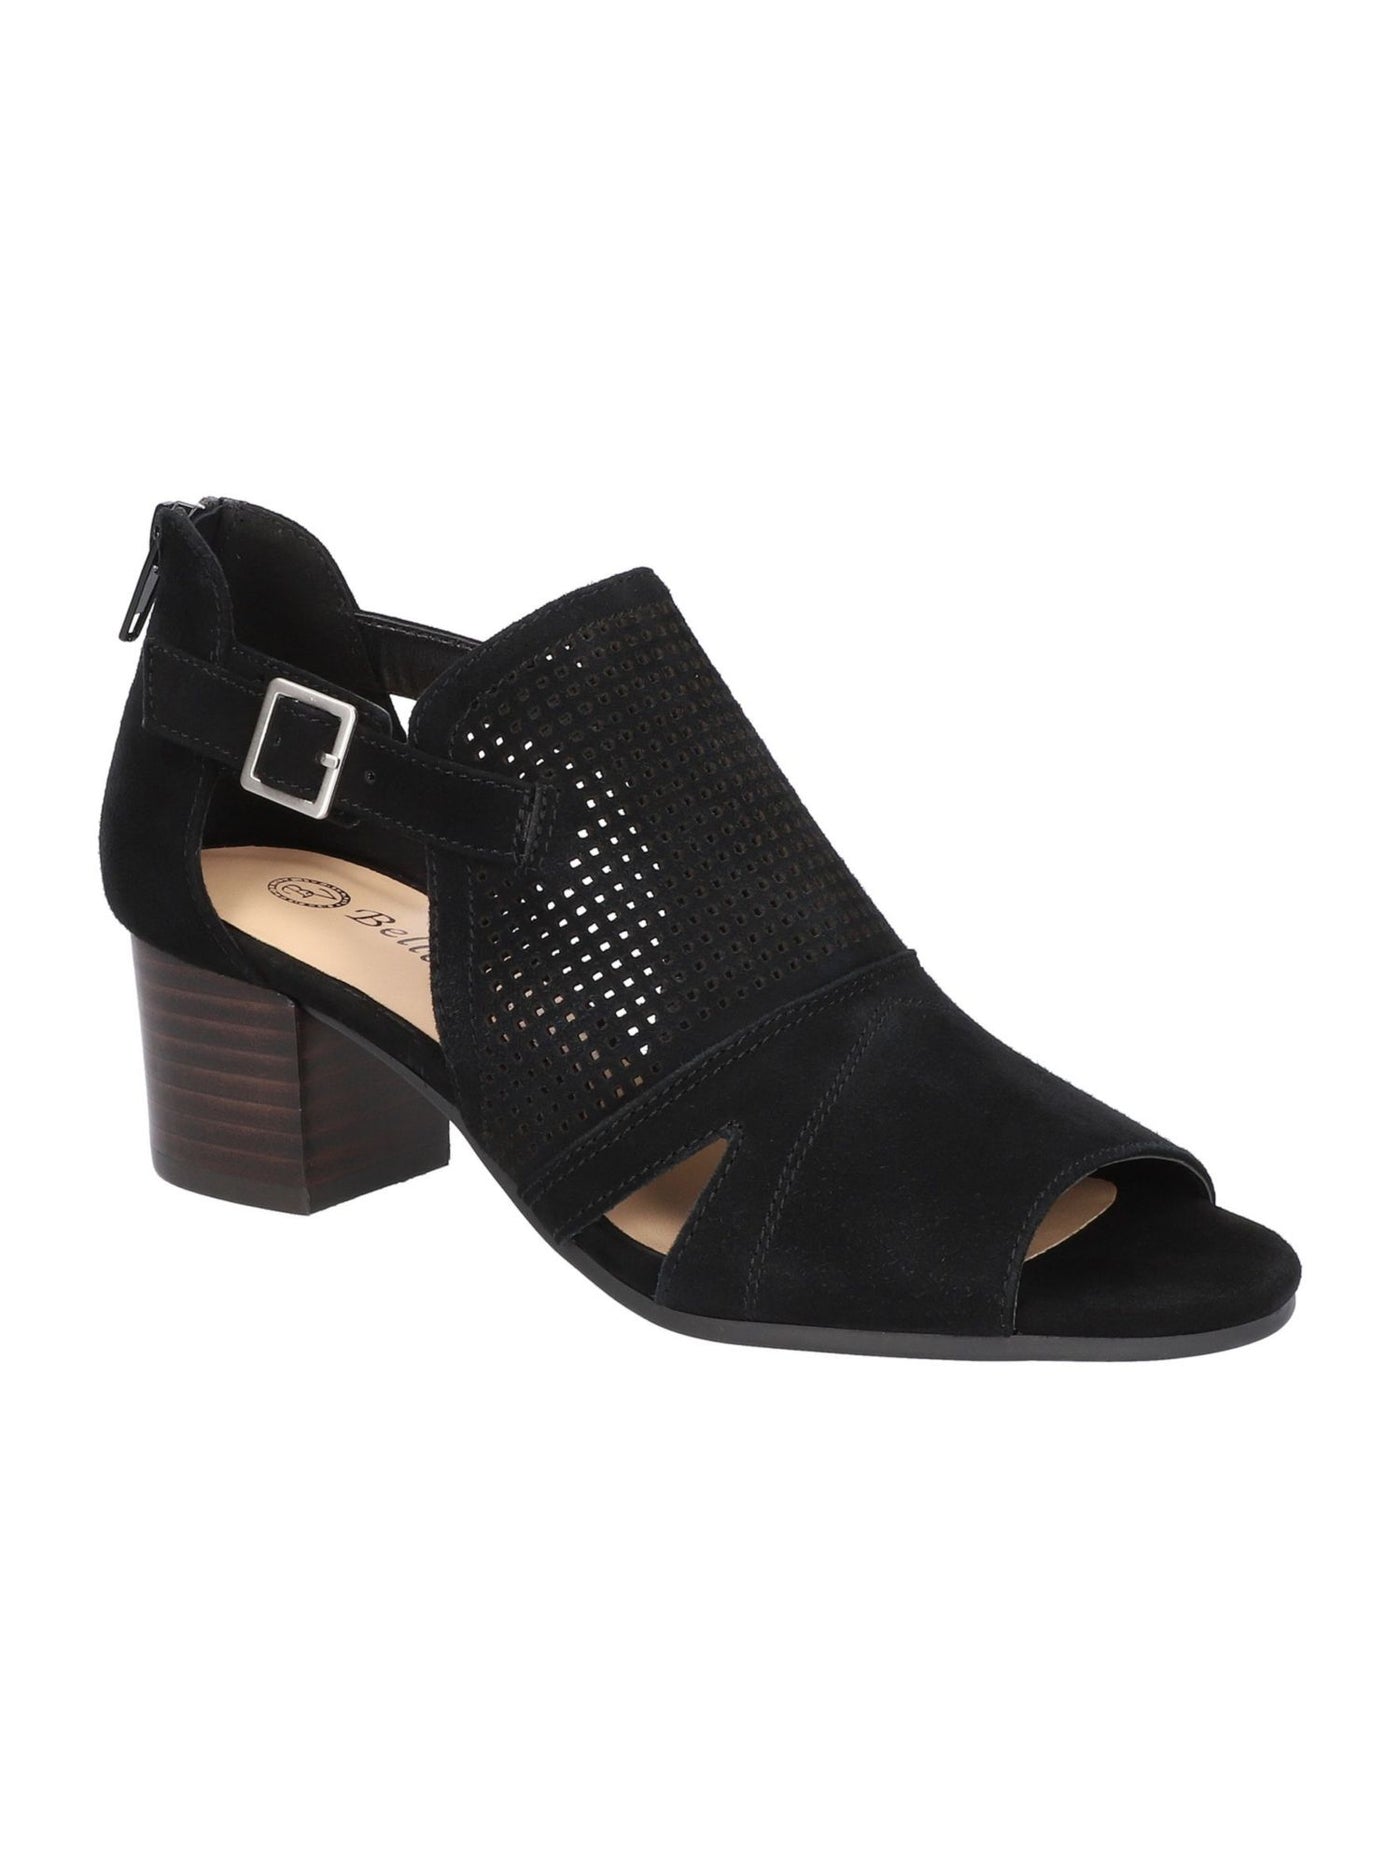 BELLA VITA Womens Black Perforated Adjustable Illiana Open Toe Block Heel Zip-Up Leather Heeled Sandal 8 N